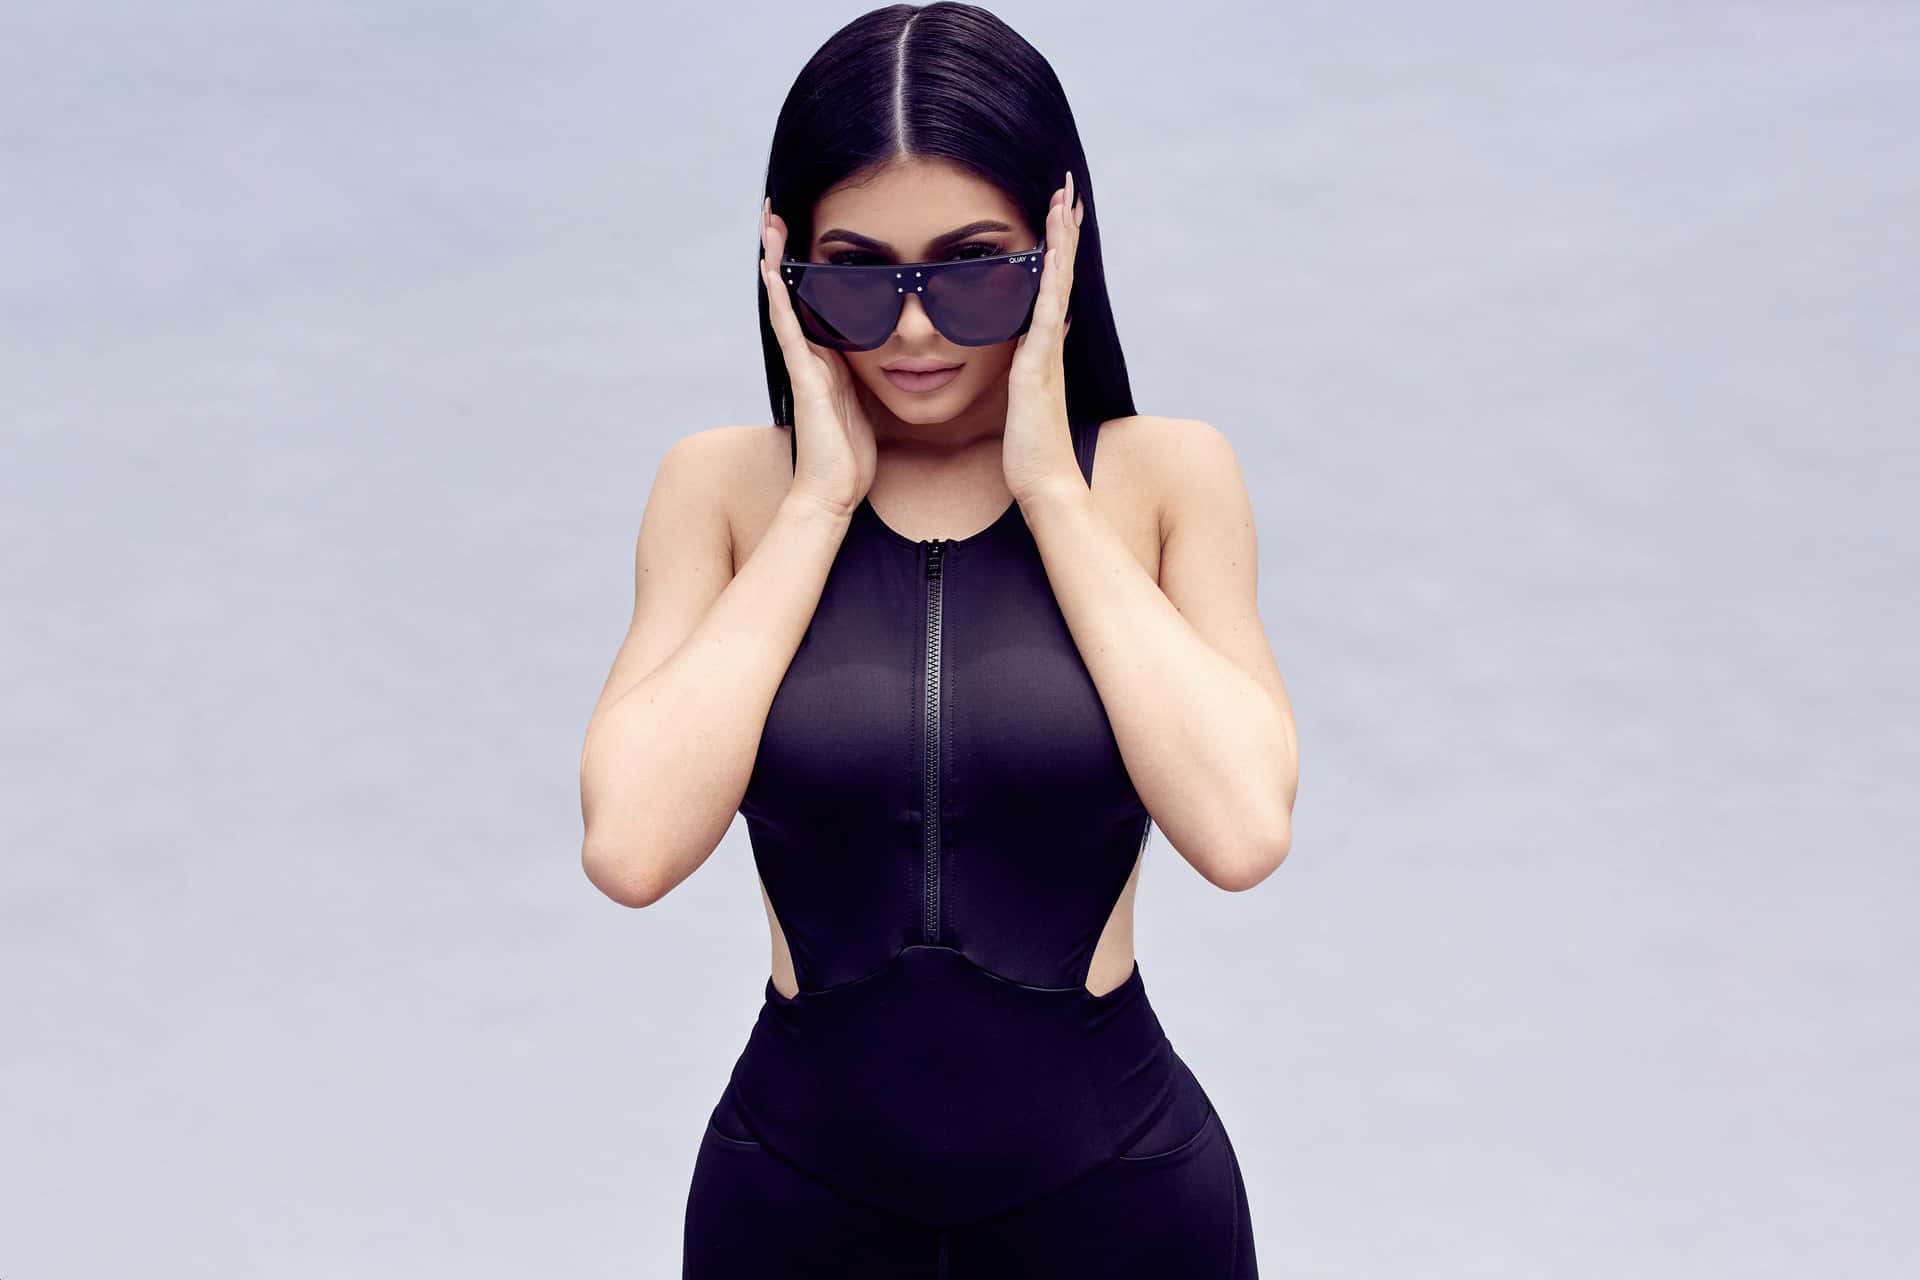 Kylie Jenner radiates beauty in her 4K resolution photoshoot. Wallpaper